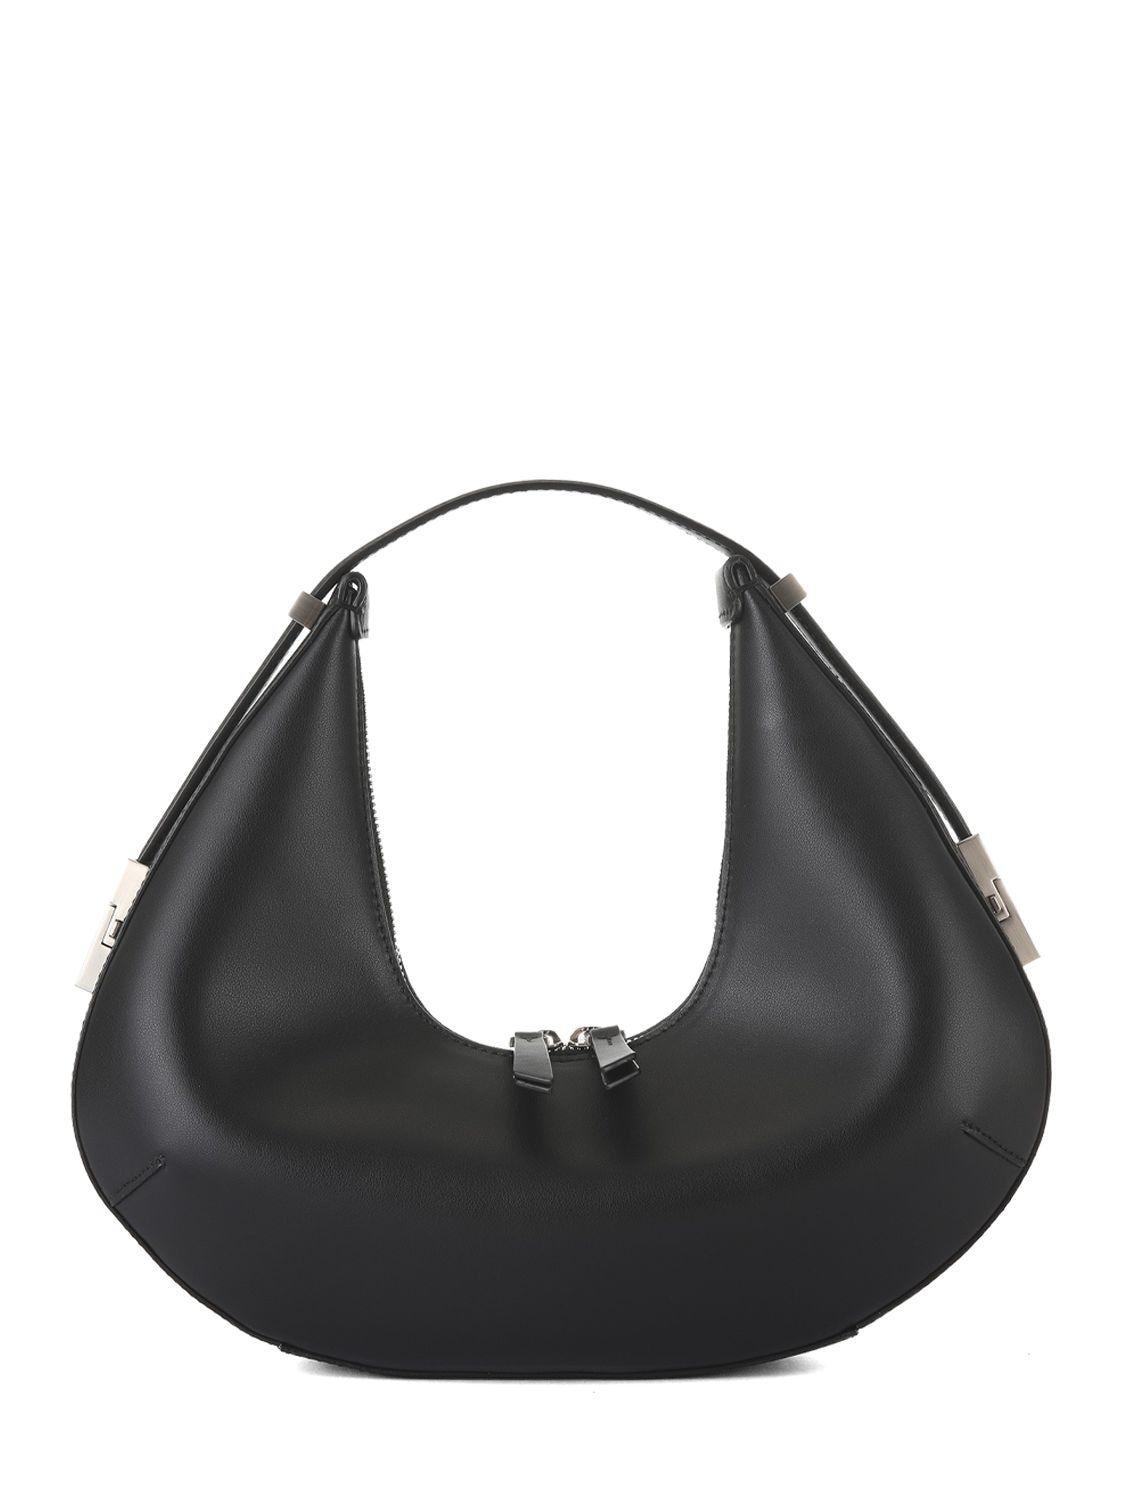 OSOI Toni Hobo Leather Shoulder Bag in Black | Lyst